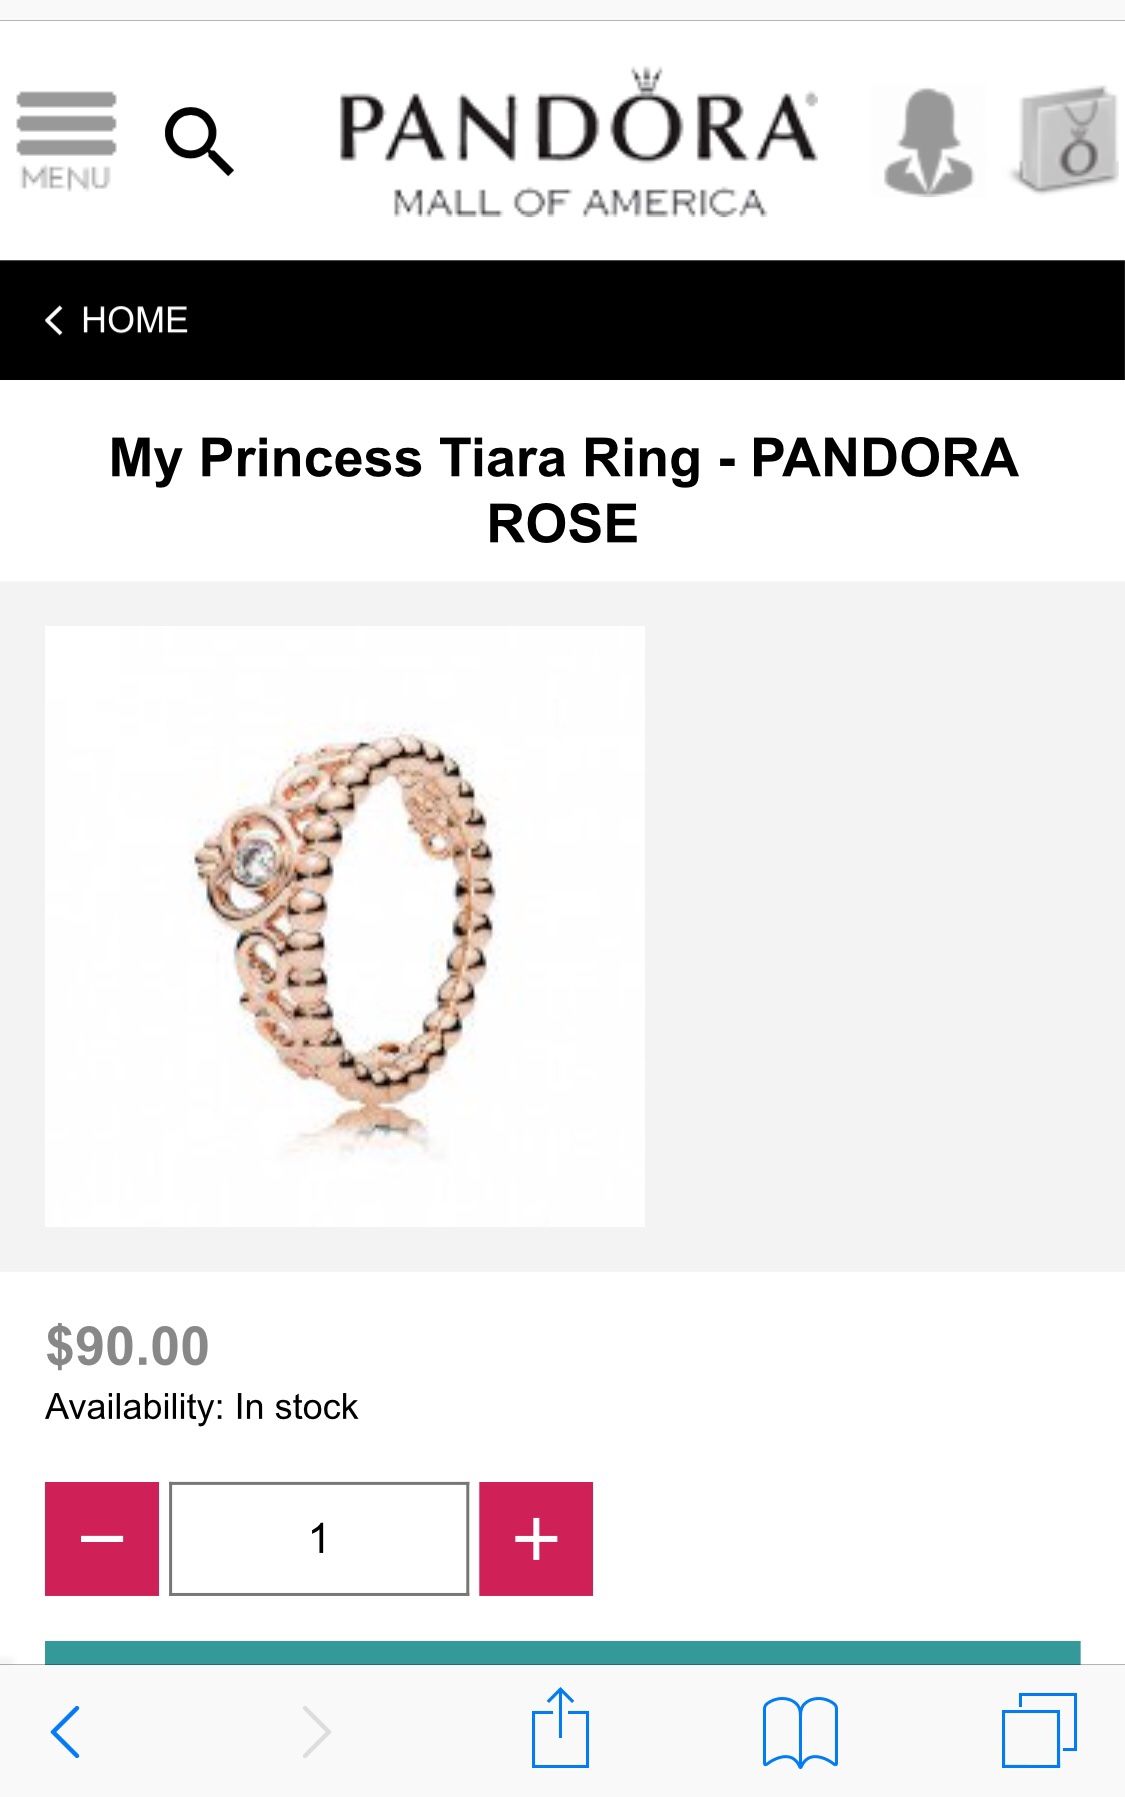 NEW "My Princess Tiara Ring" from Pandora